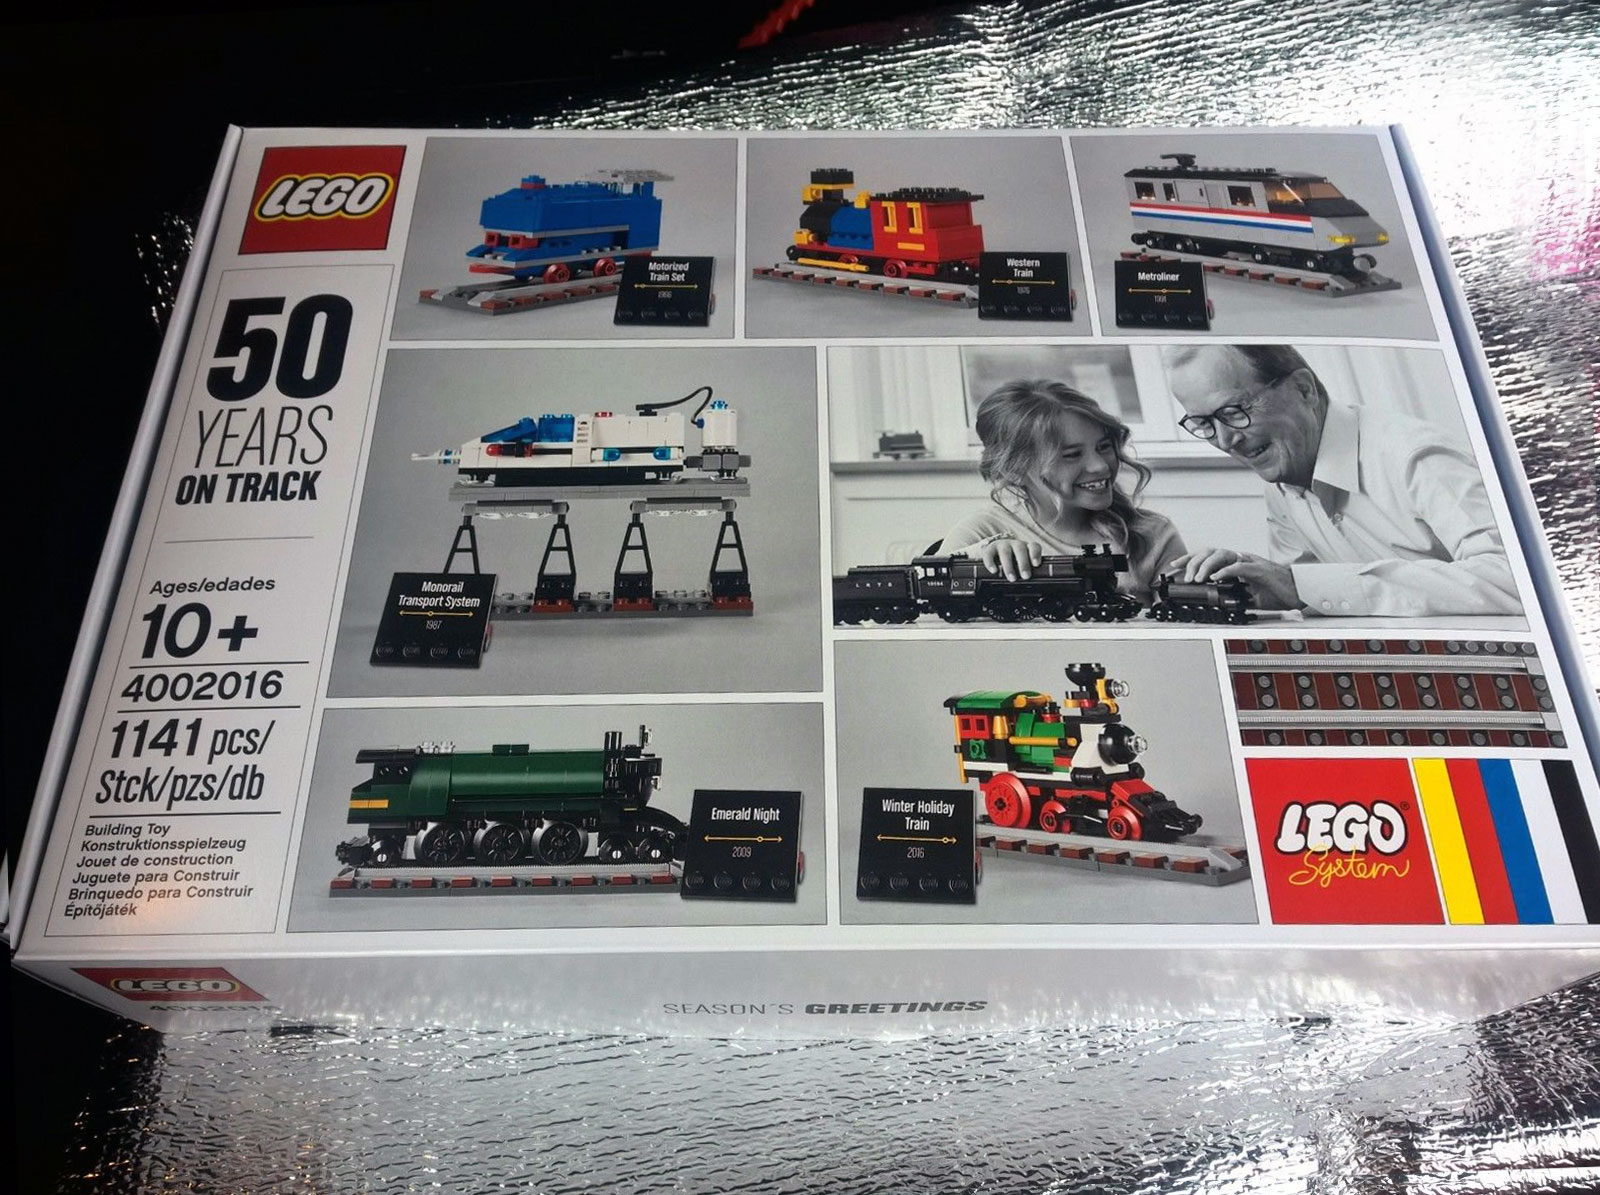 Brickfinder - Exclusive LEGO “50 Years On Track” Employee Gift